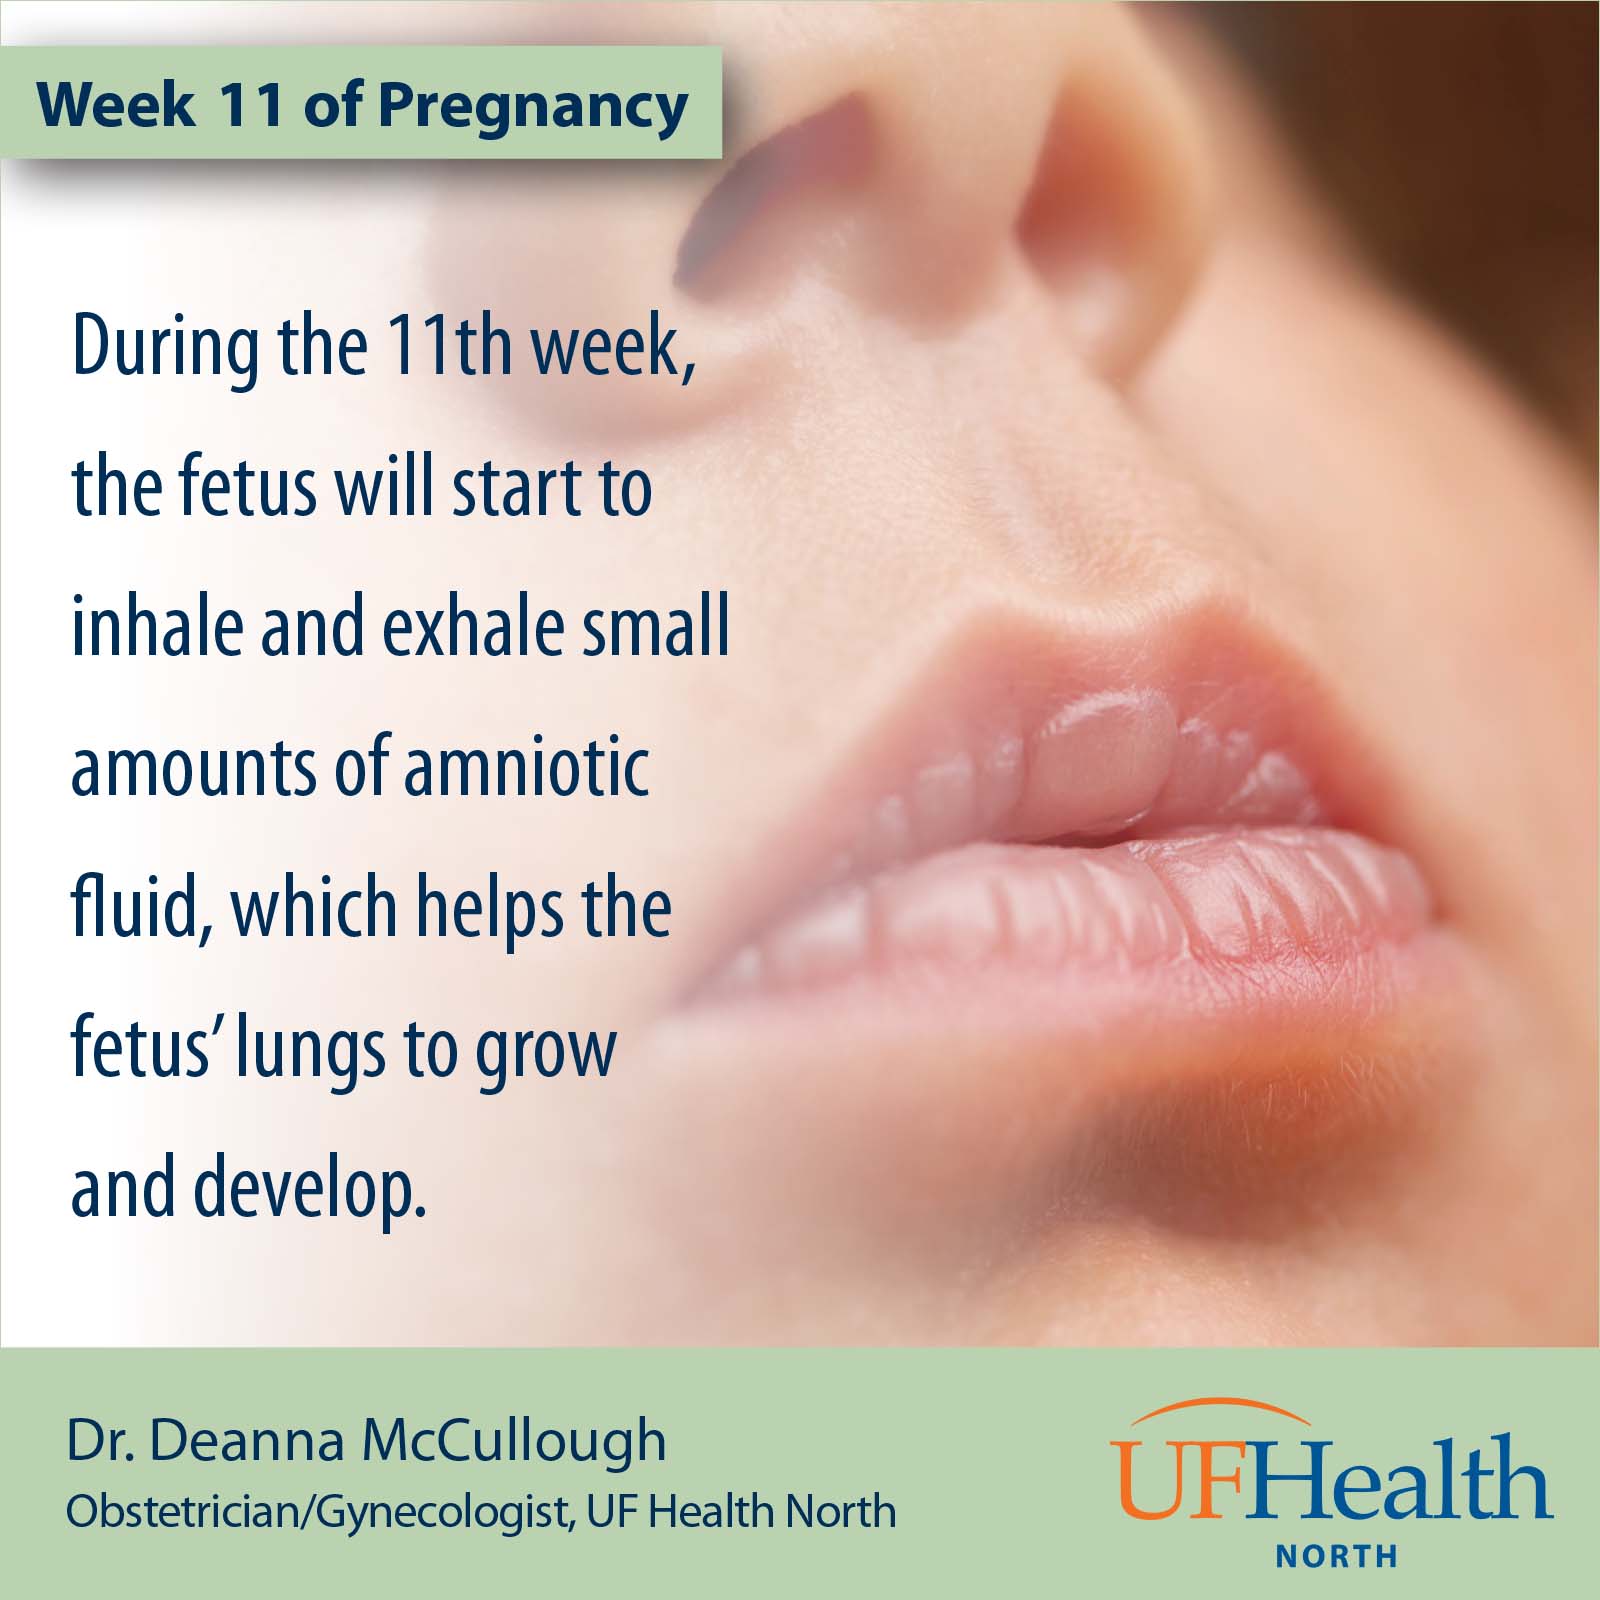 UF Health North pregnancy tip 11